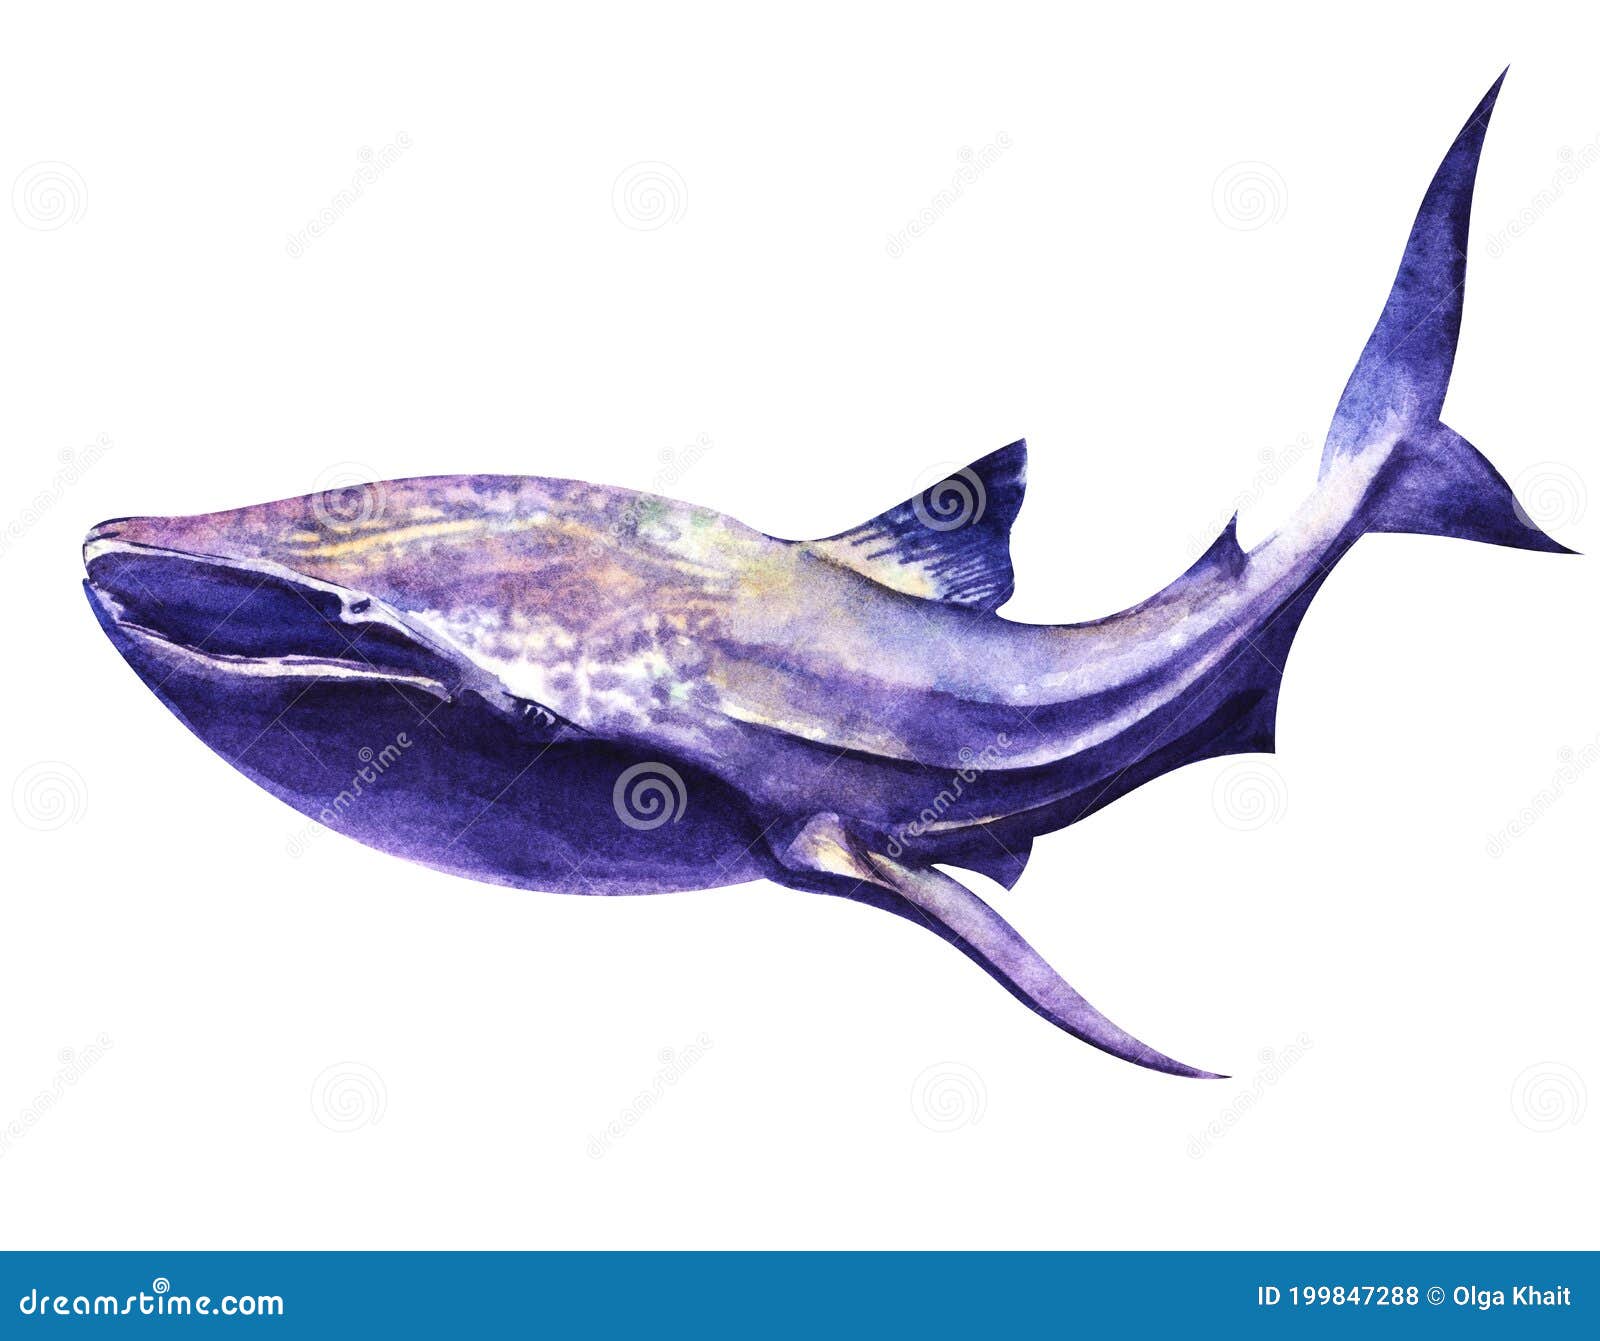 Whale Shark Illustration Poster | Zazzle